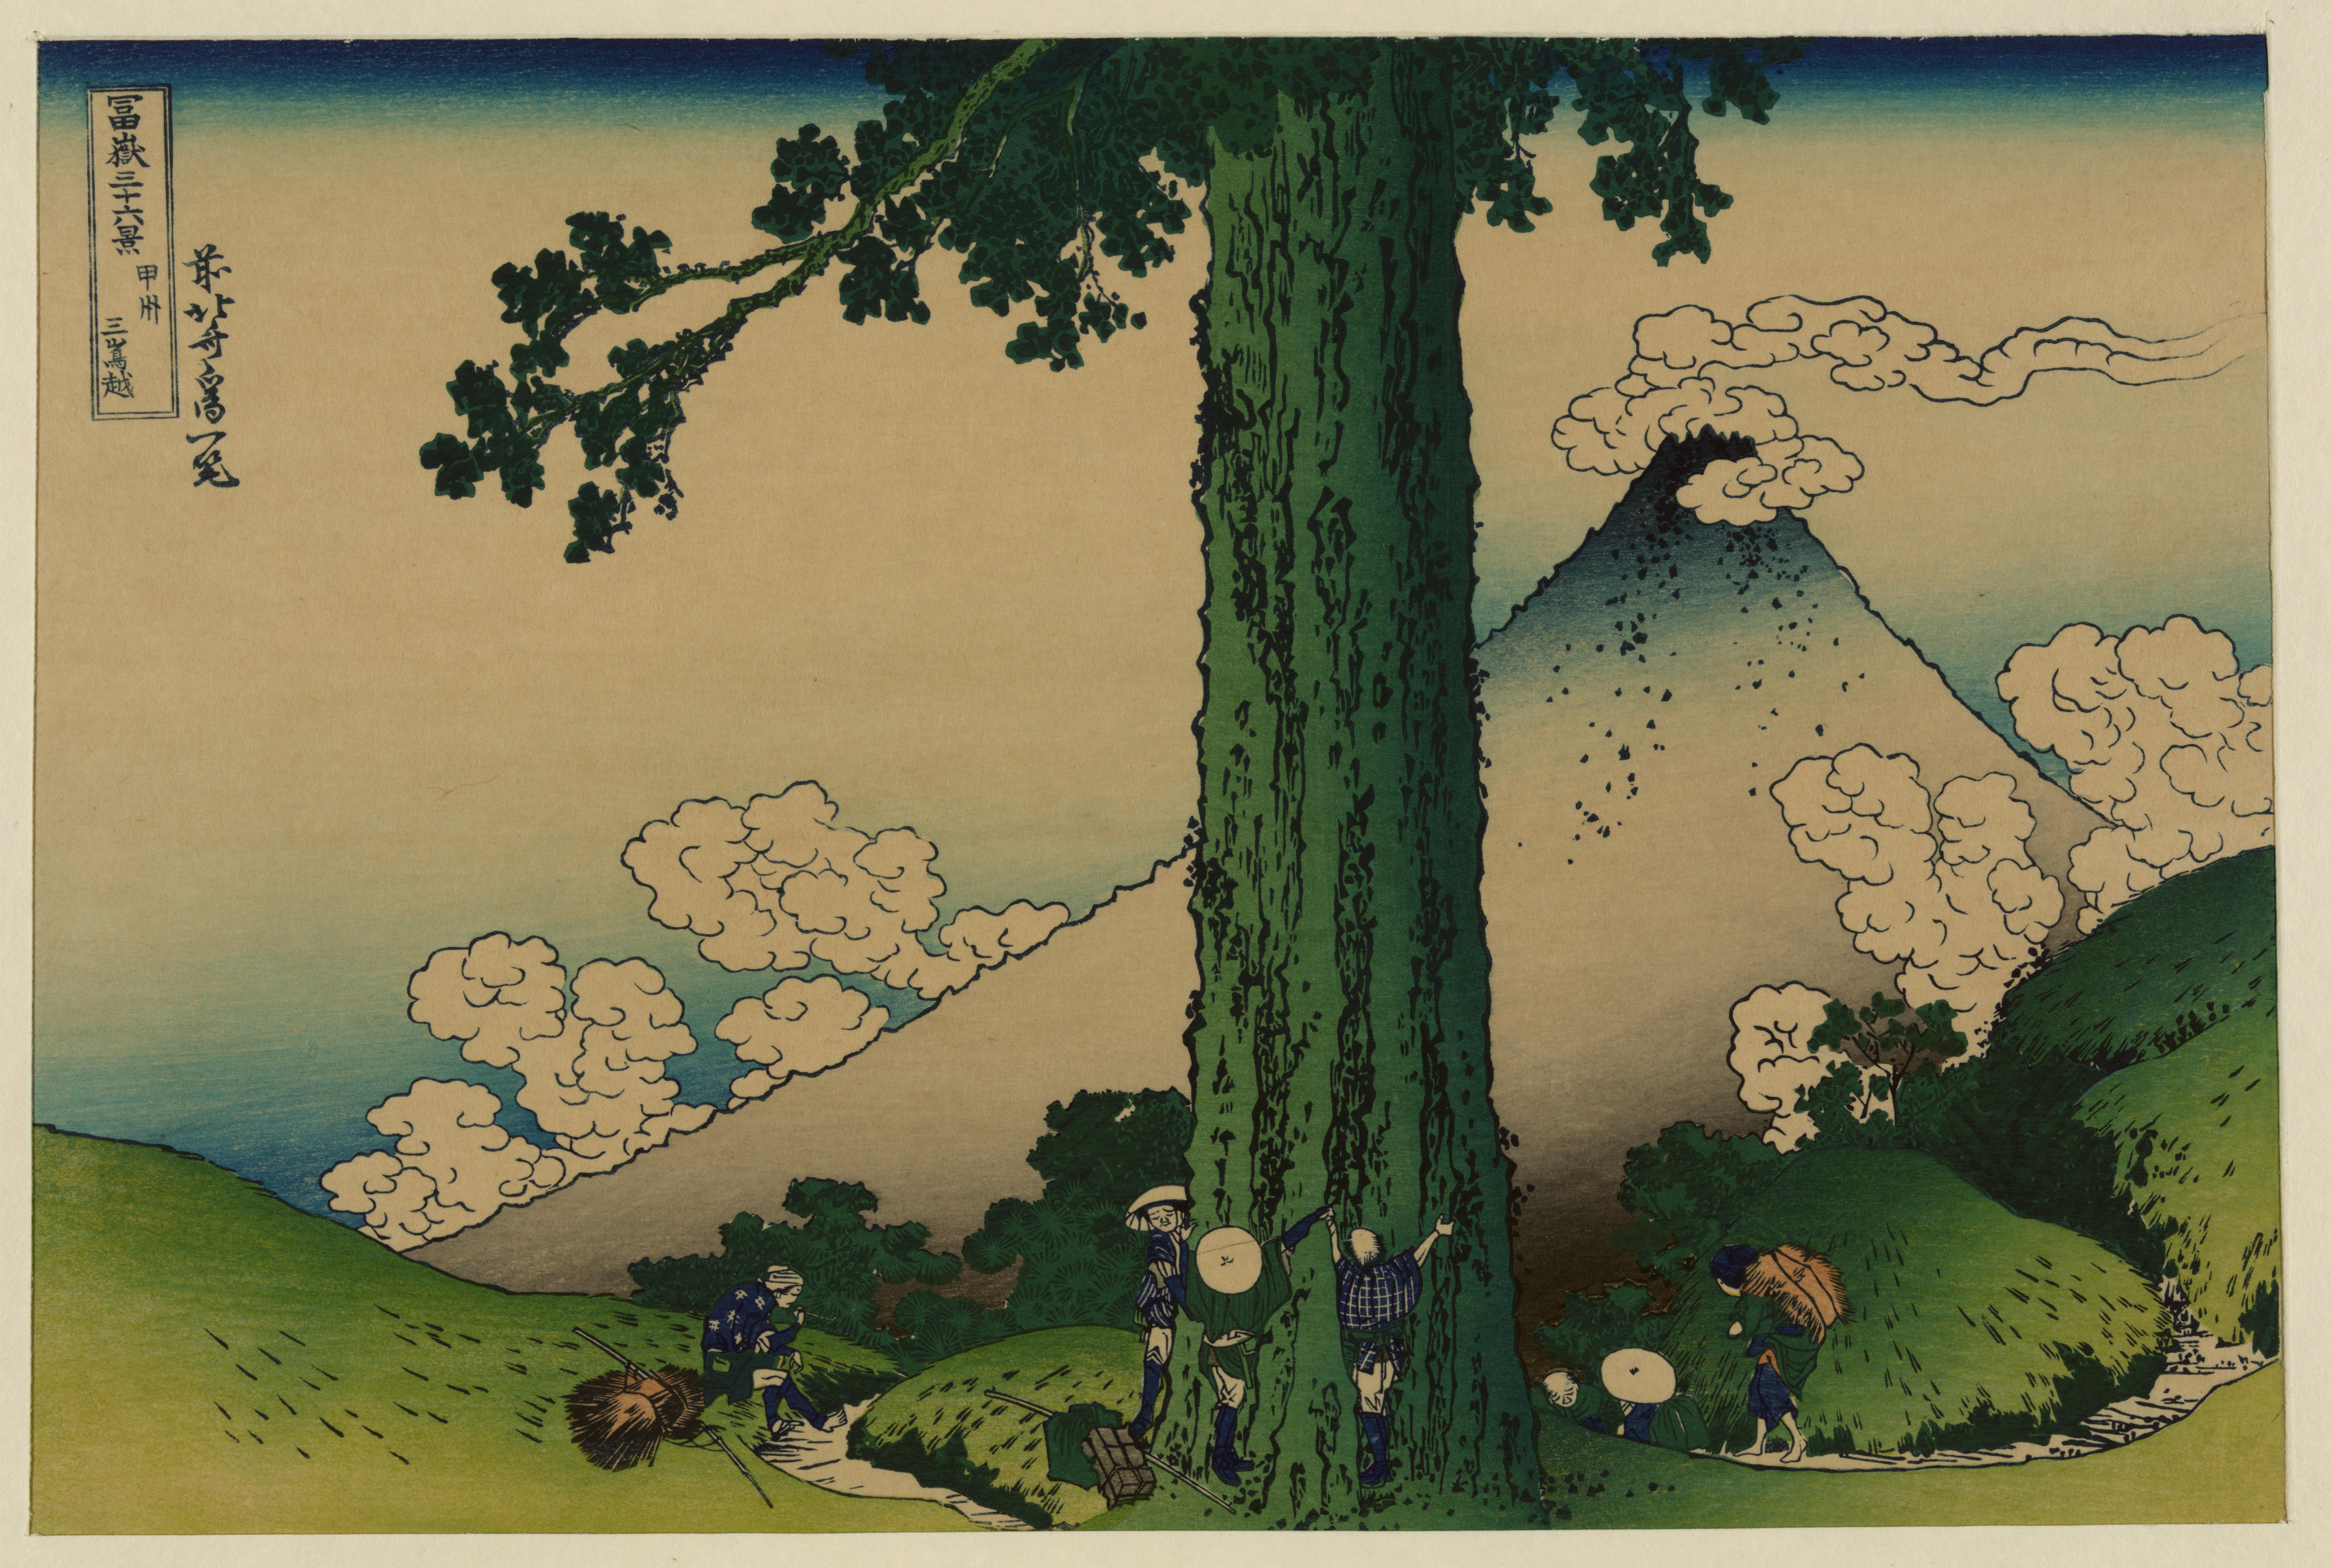 Katsushika Hokusai. Mishima Pass in Kai Province, from the series Thirty-six Views of Mount Fuji